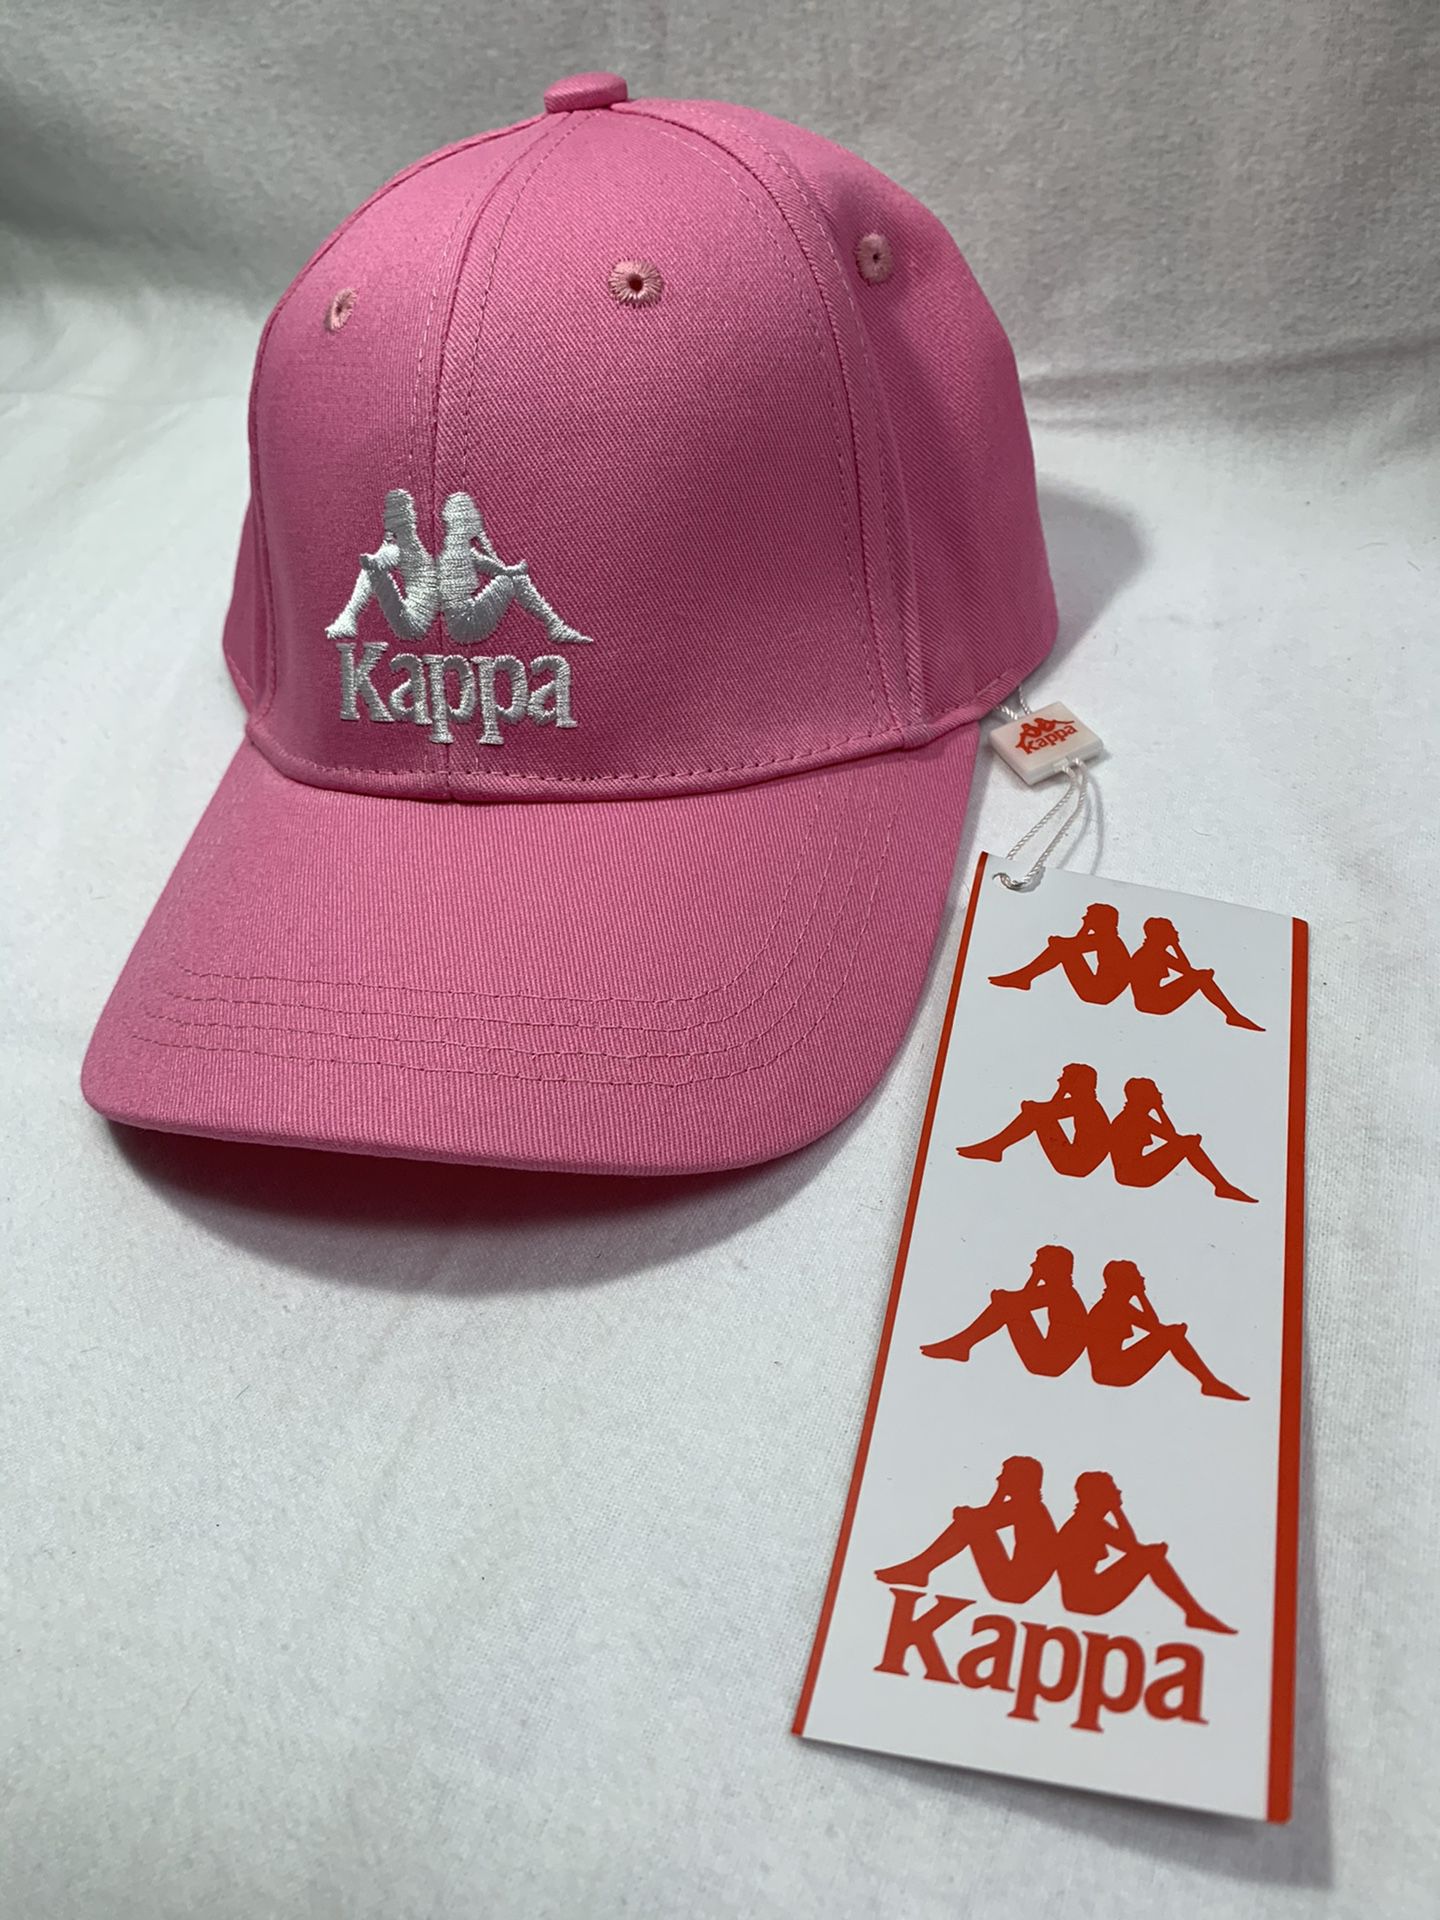 NWT Kappa Logo Pink & White Embroidered Snapback Hat Cap